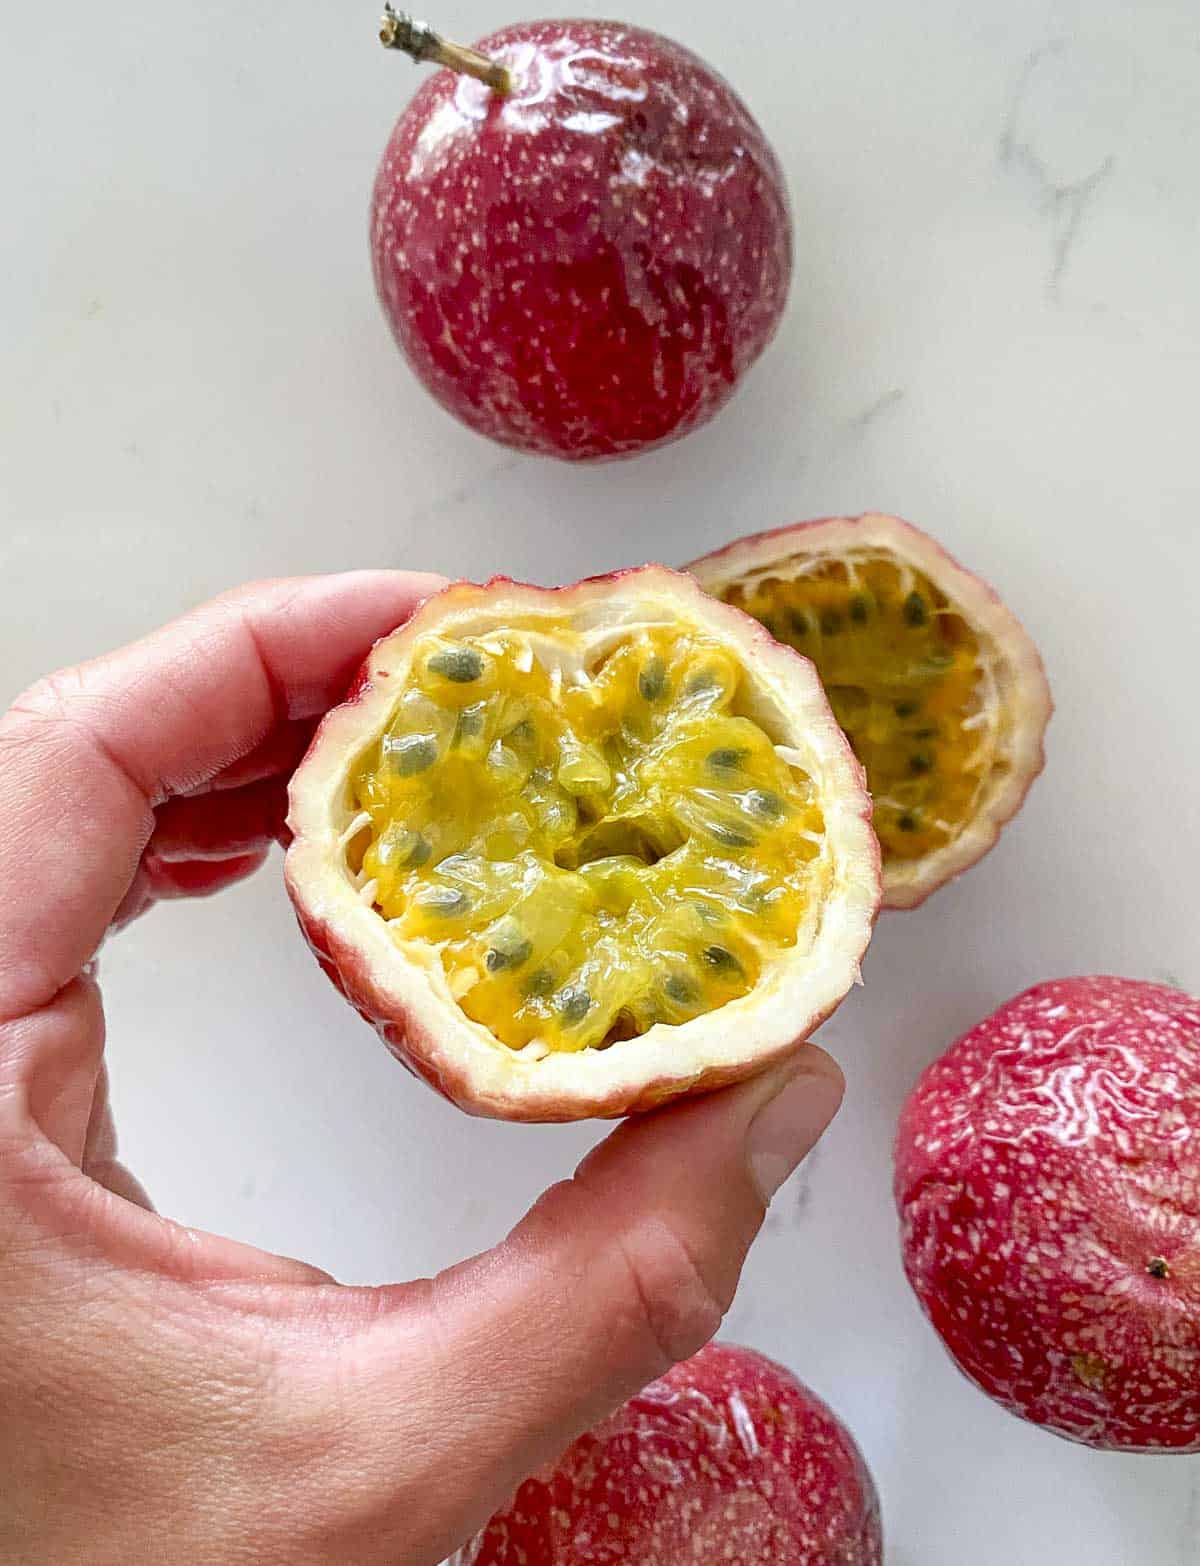 Fresh passion fruit cut in half.